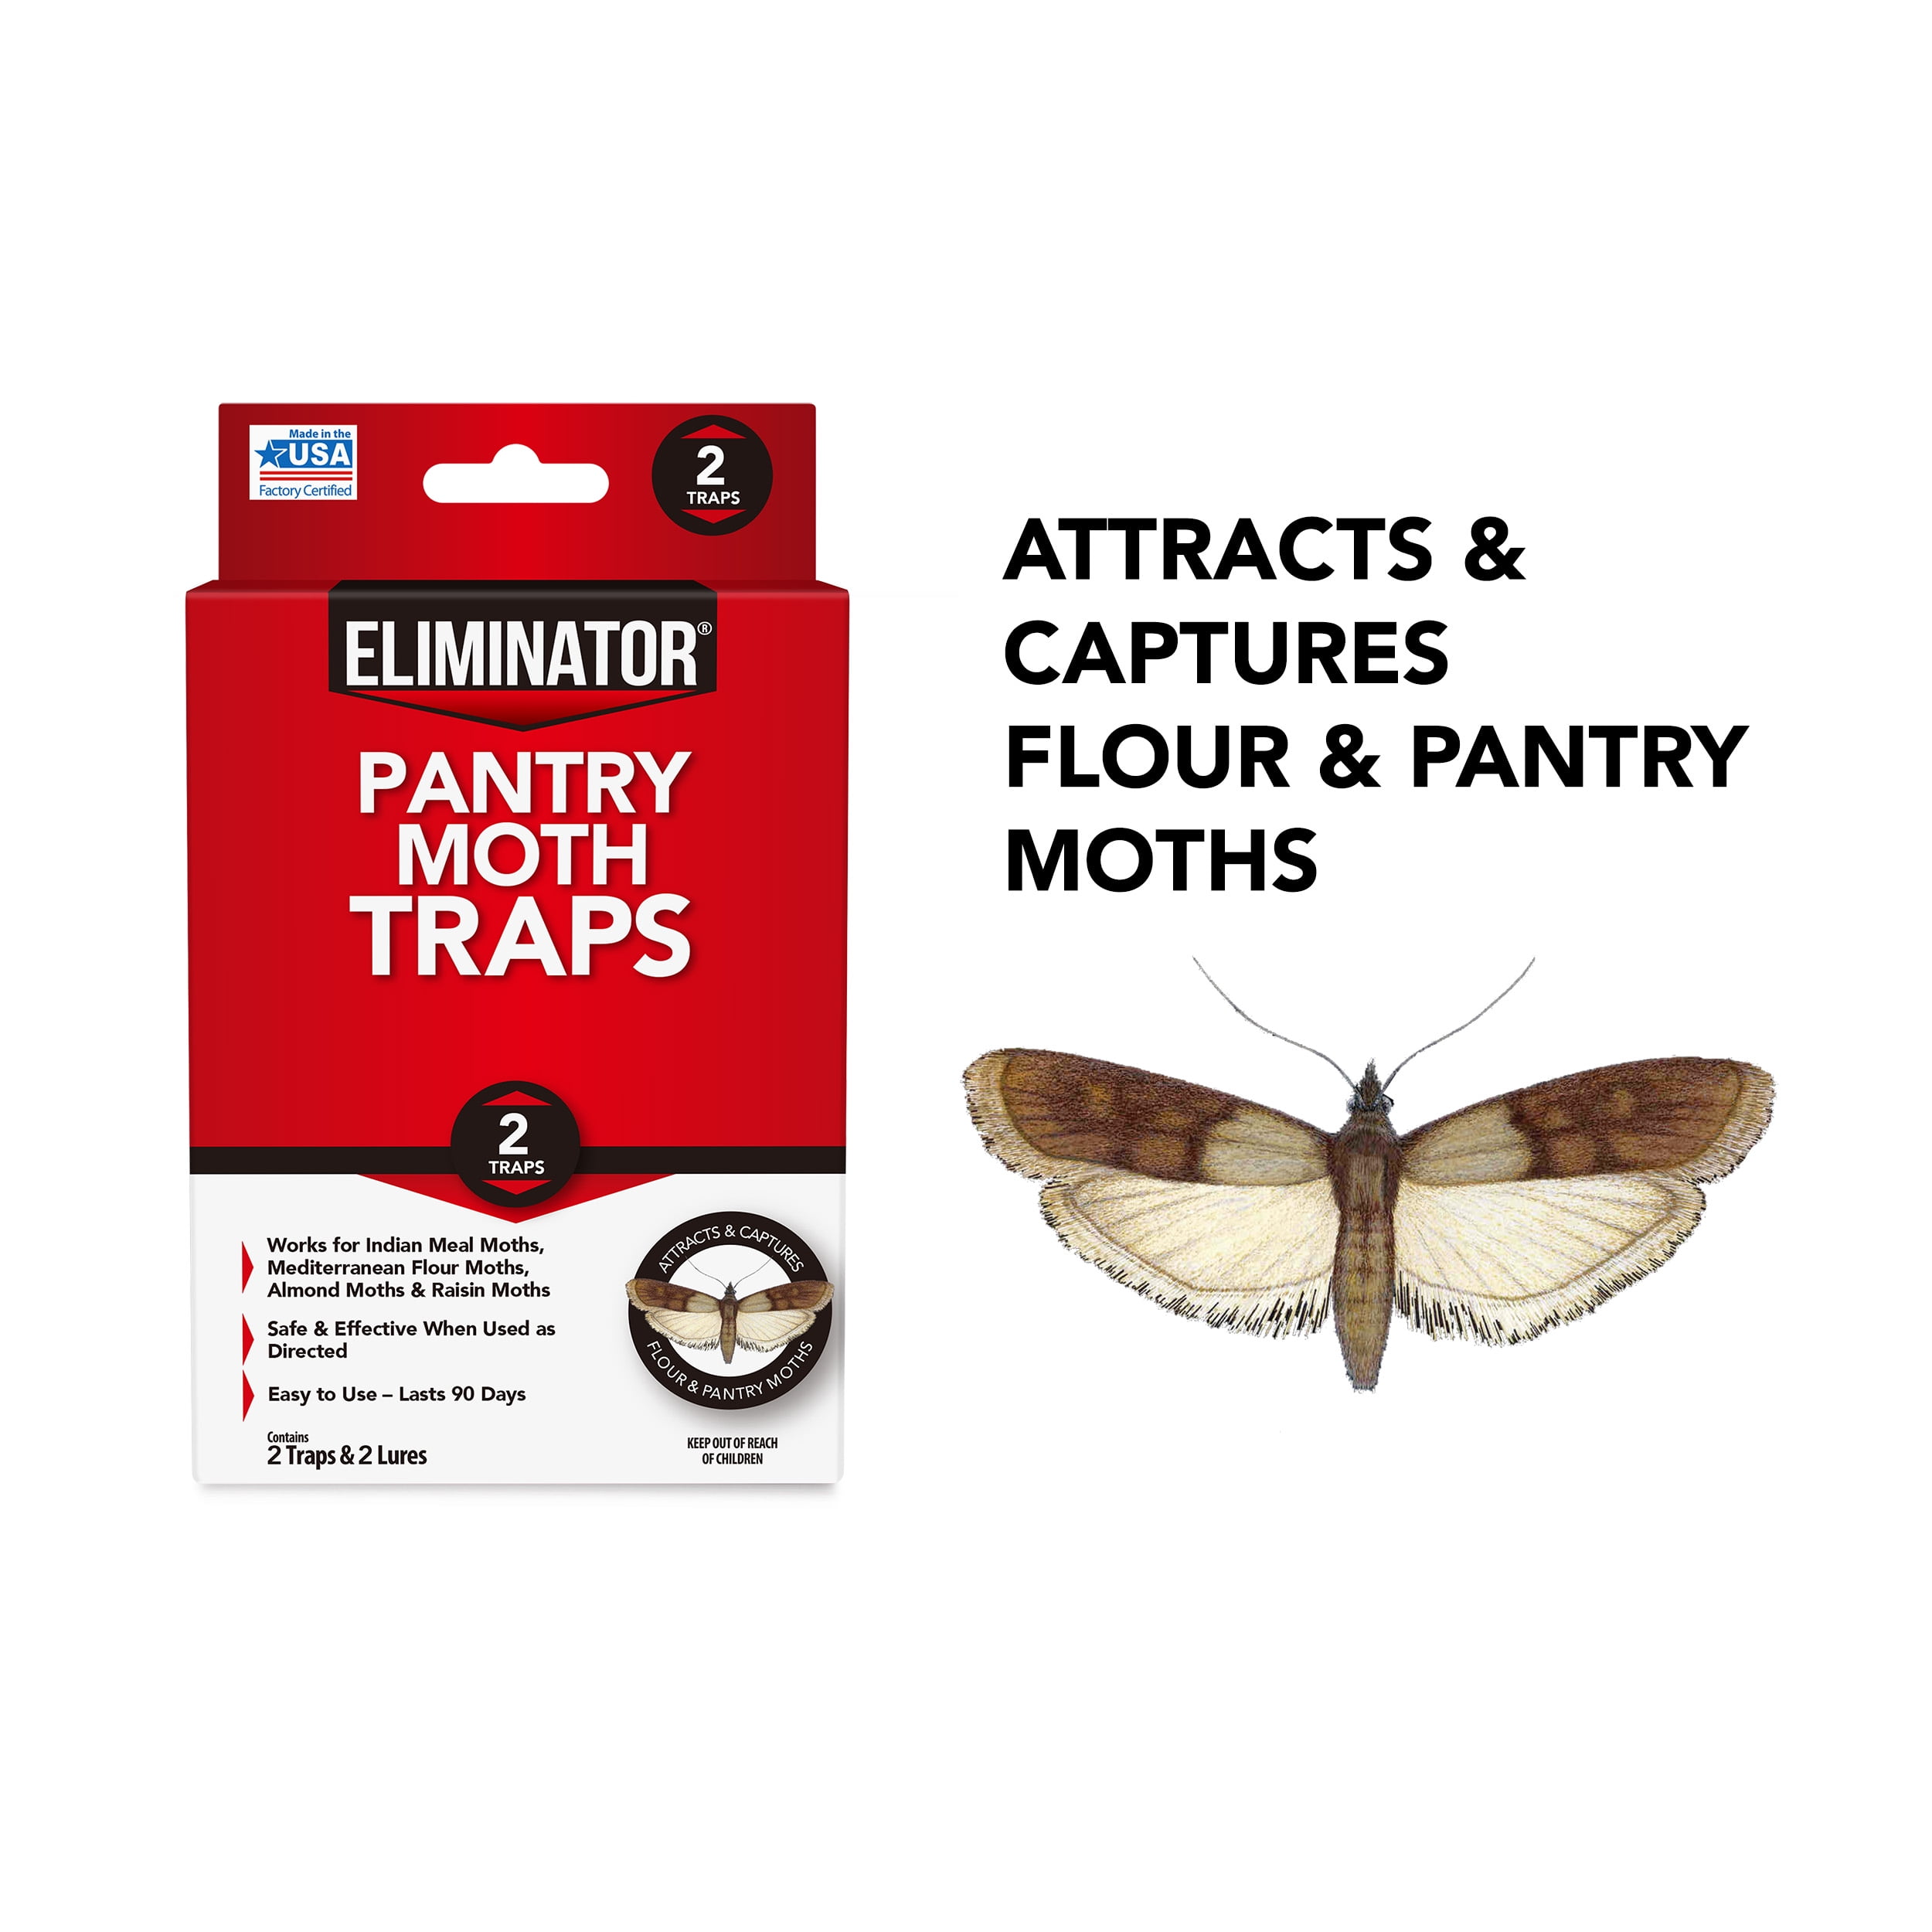 No Escape Moth Traps, 2-Pk.